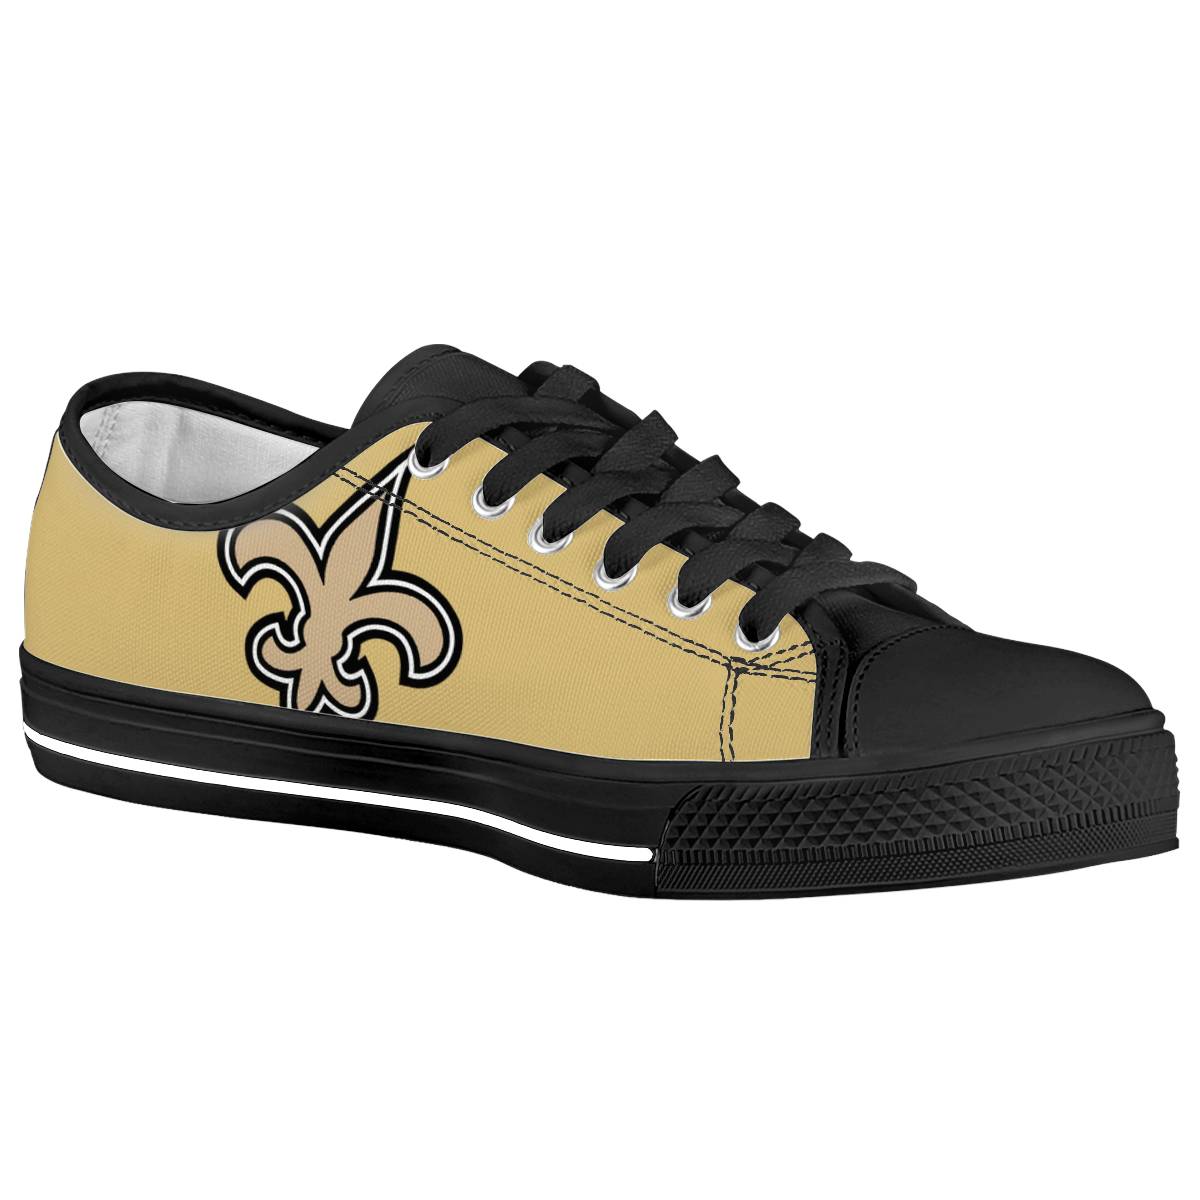 Women's New Orleans Saints Low Top Canvas Sneakers 005